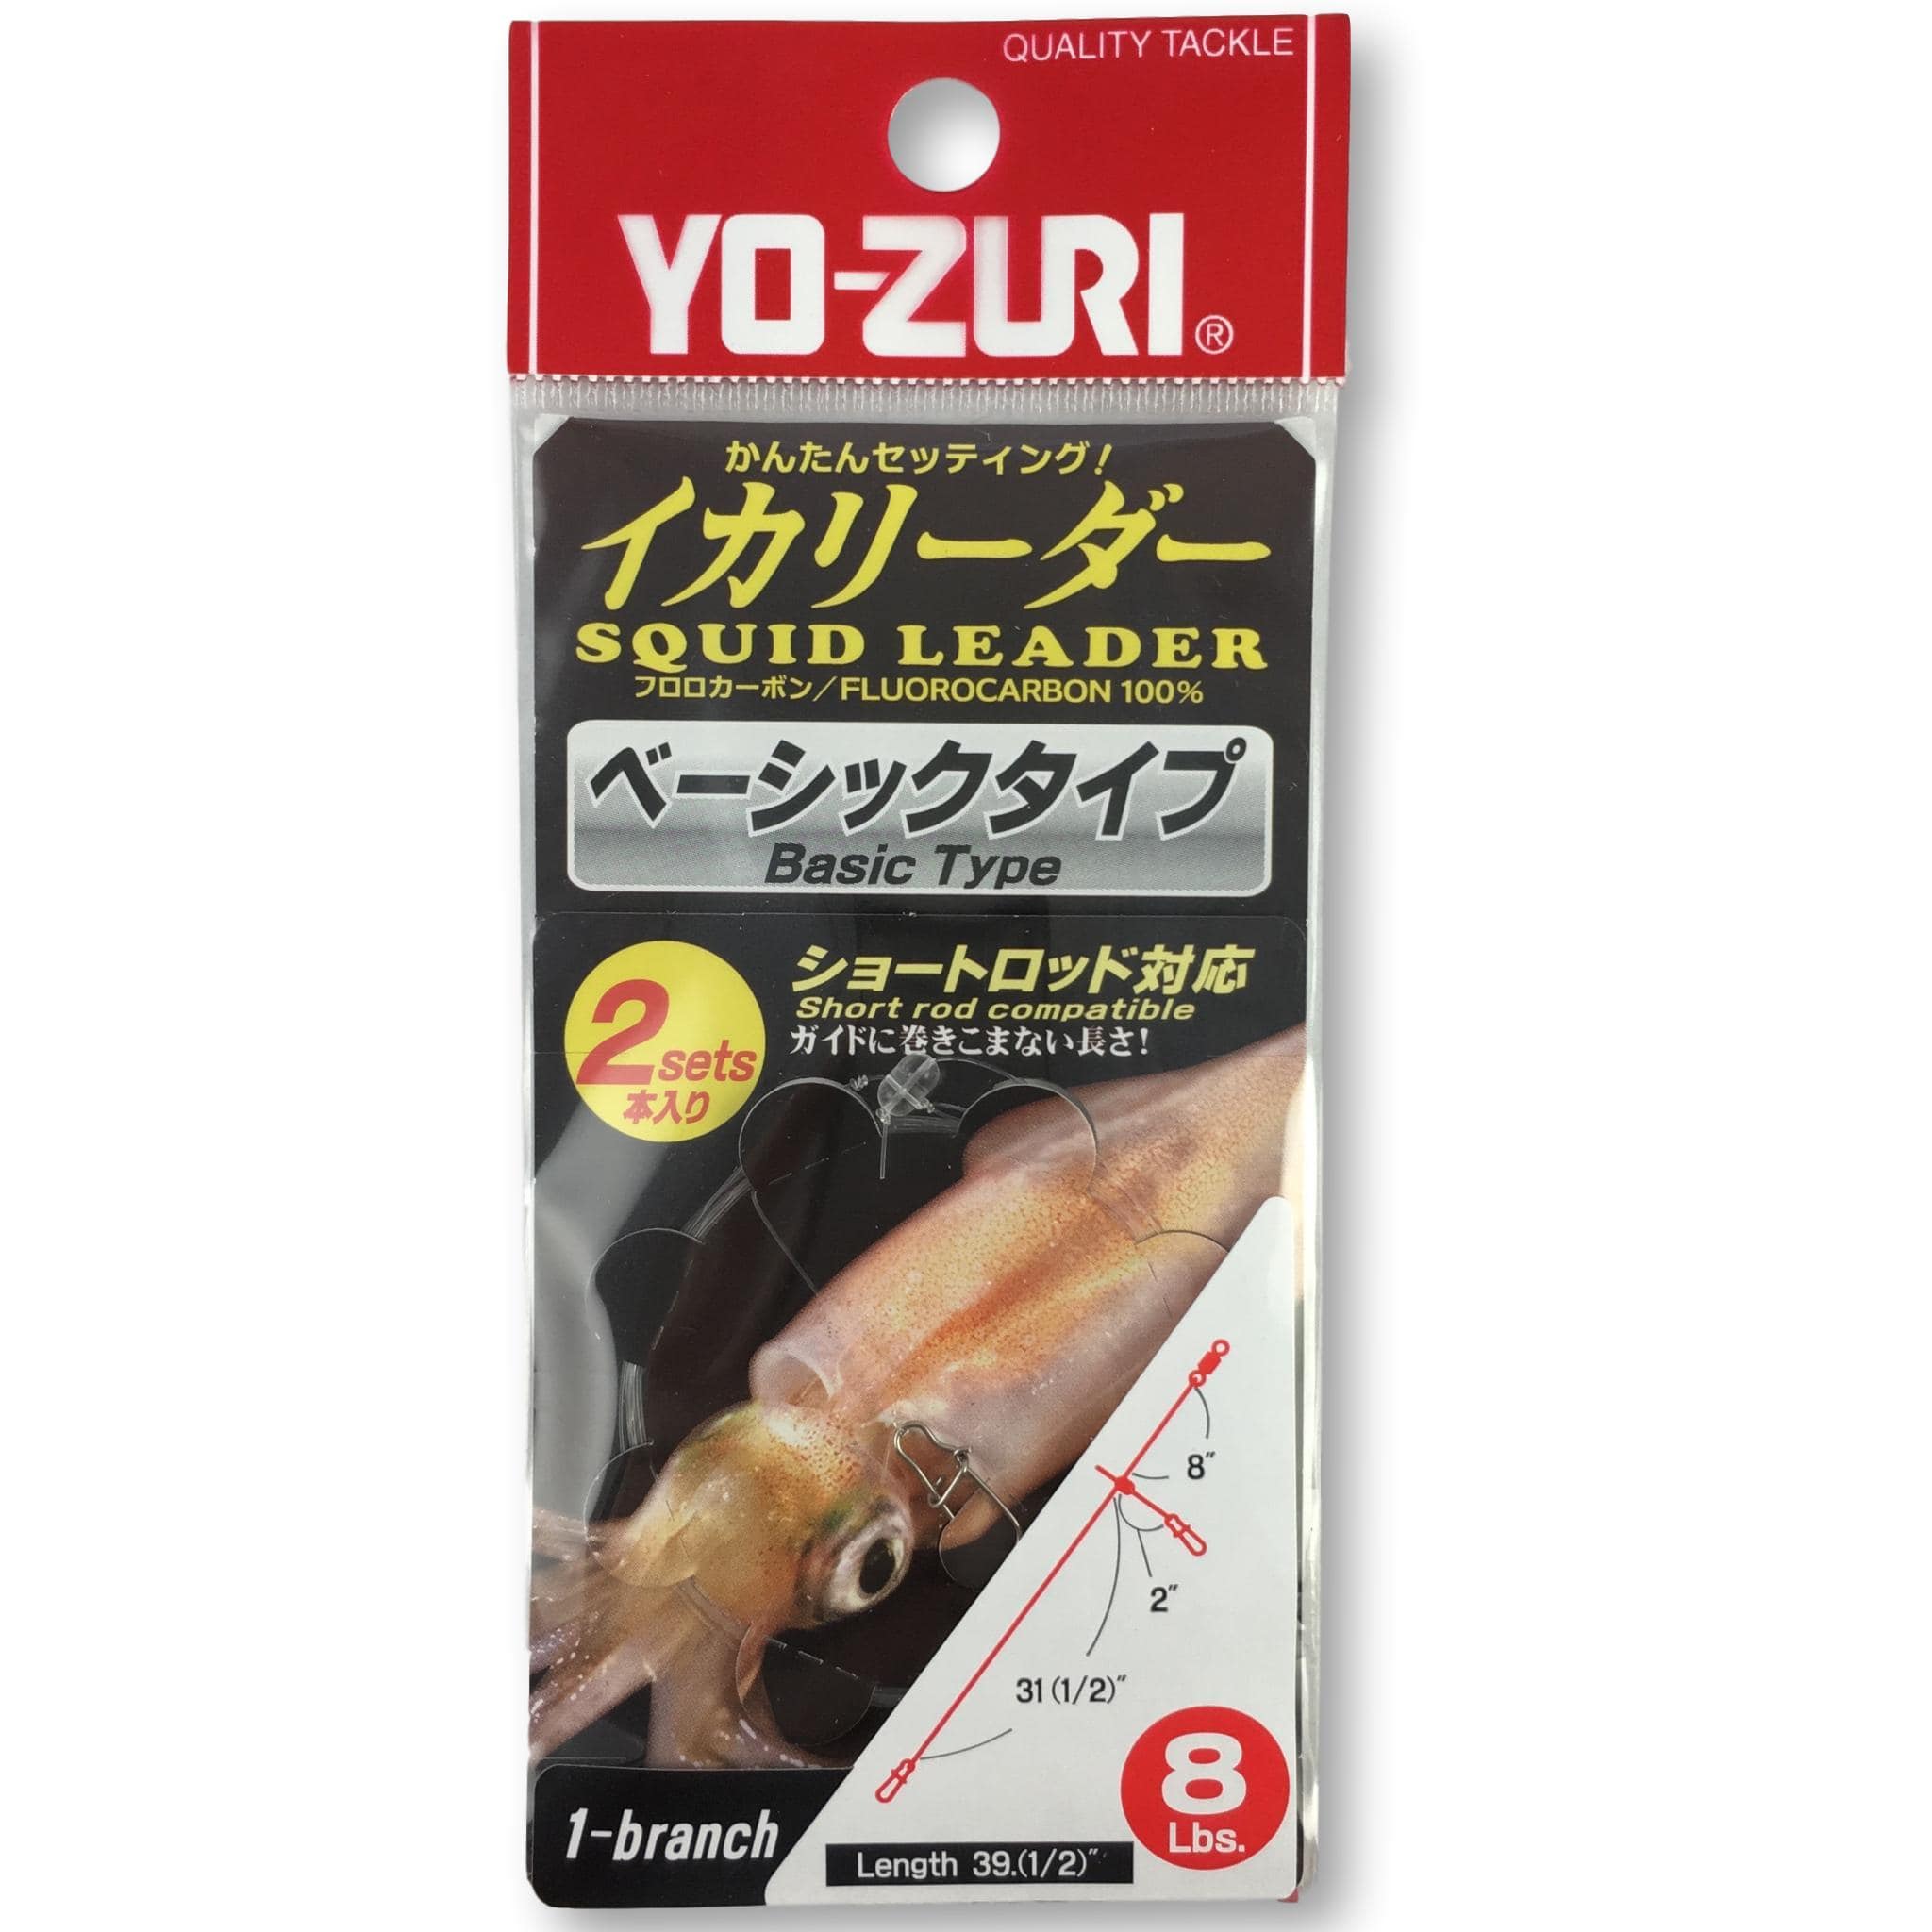 Yo-Zuri Squid Leaders - The Saltwater Edge